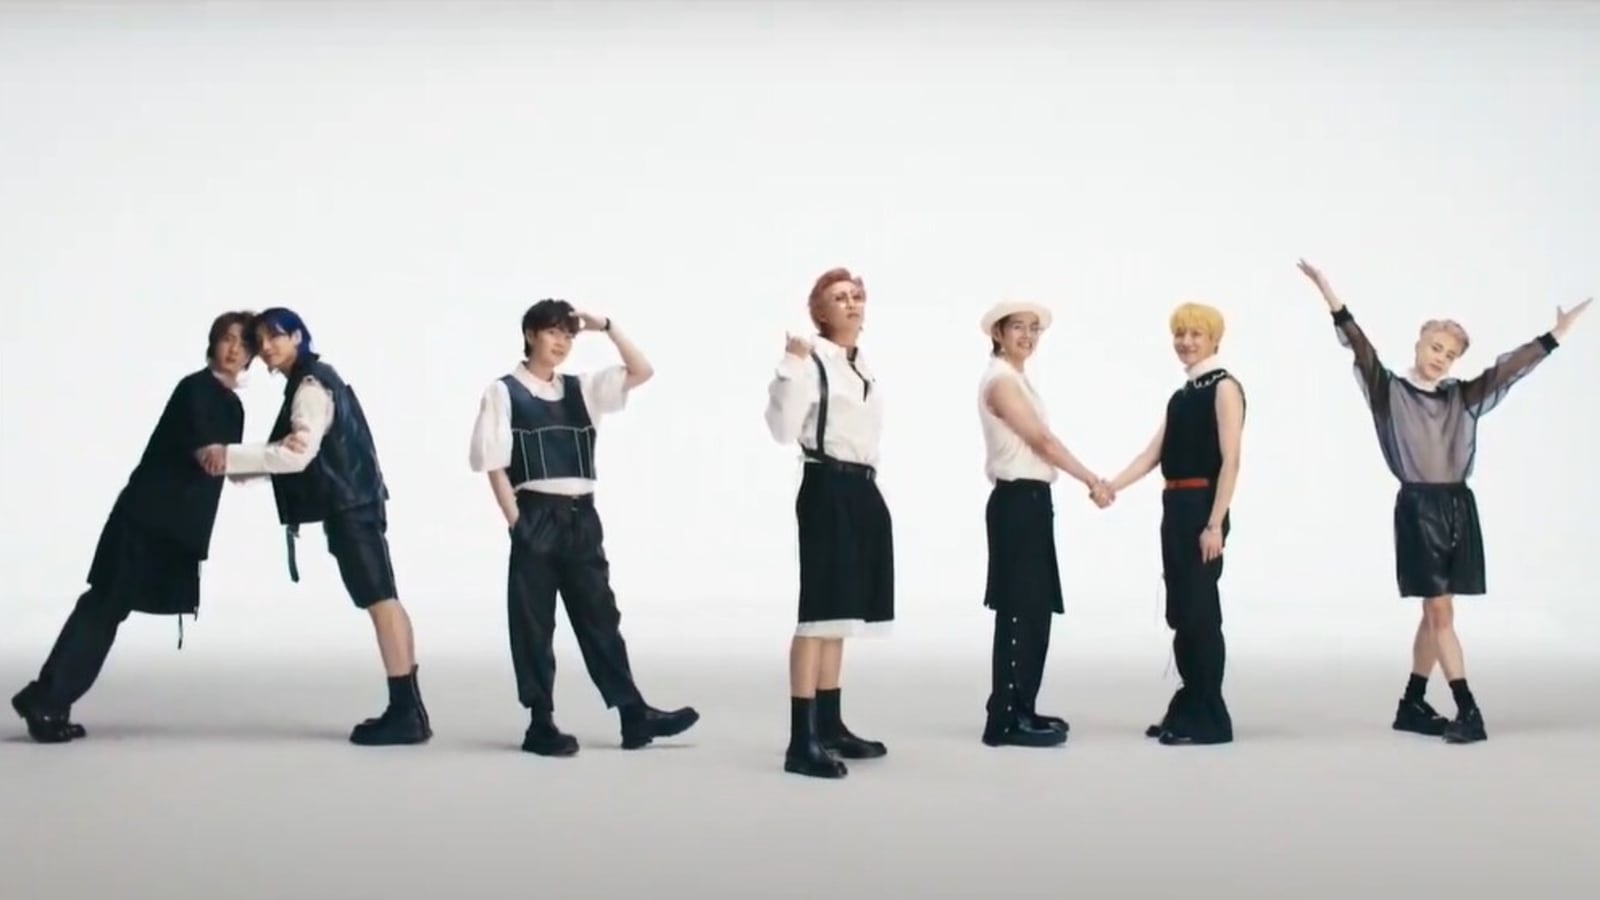 BTS Butter music video: RM, Jin, Suga, J-Hope, Jimin, V and Jungkook's